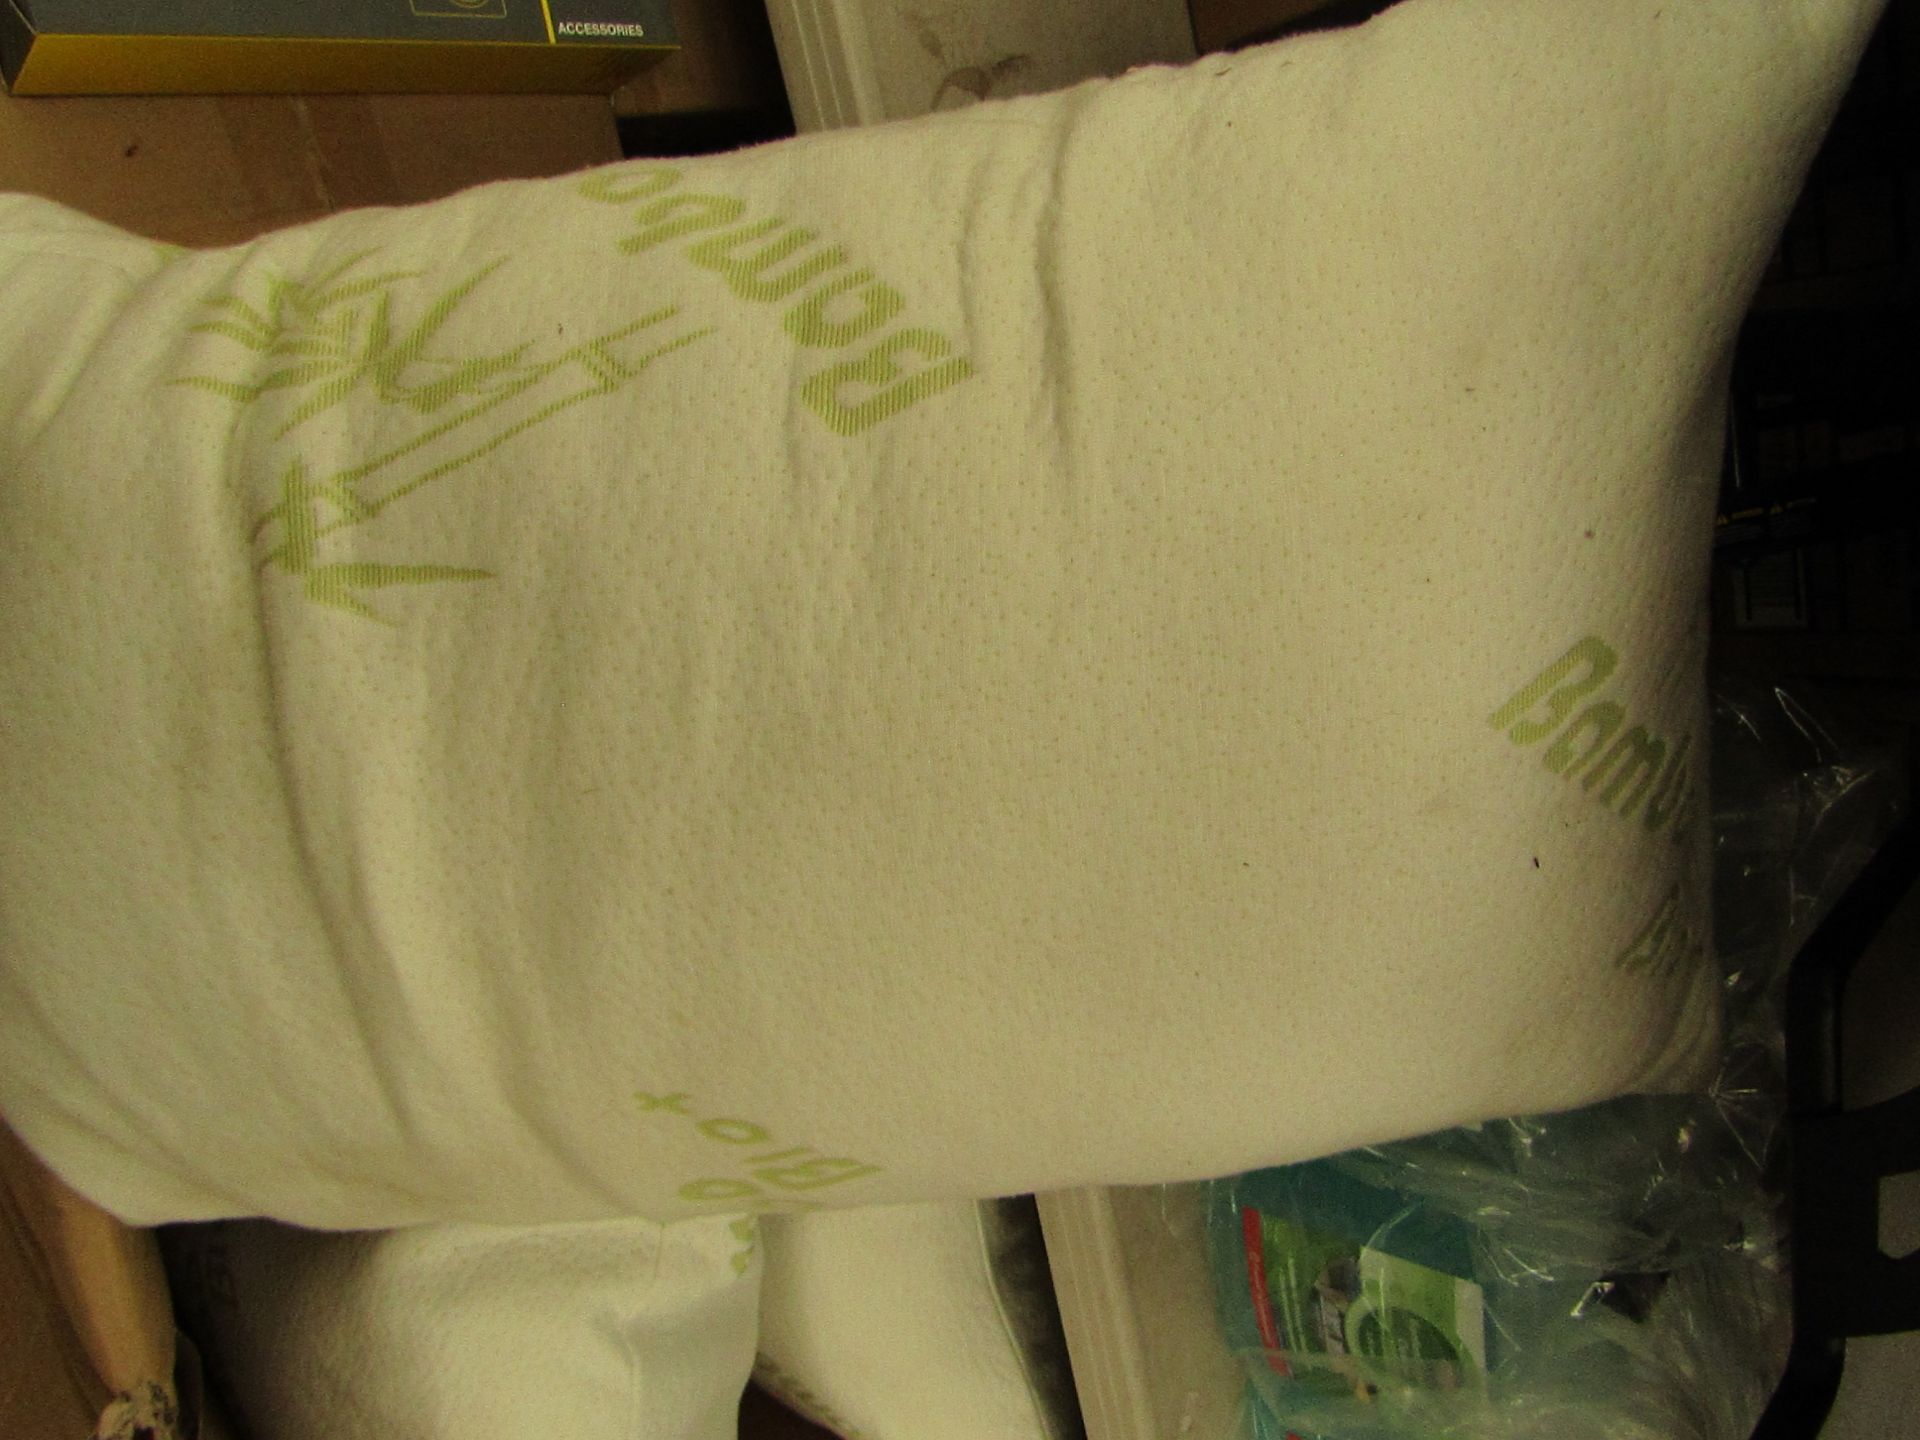 2x Bamboo Bio+ Memory Foam Pillows - Unpackaged, May Need A Wash.